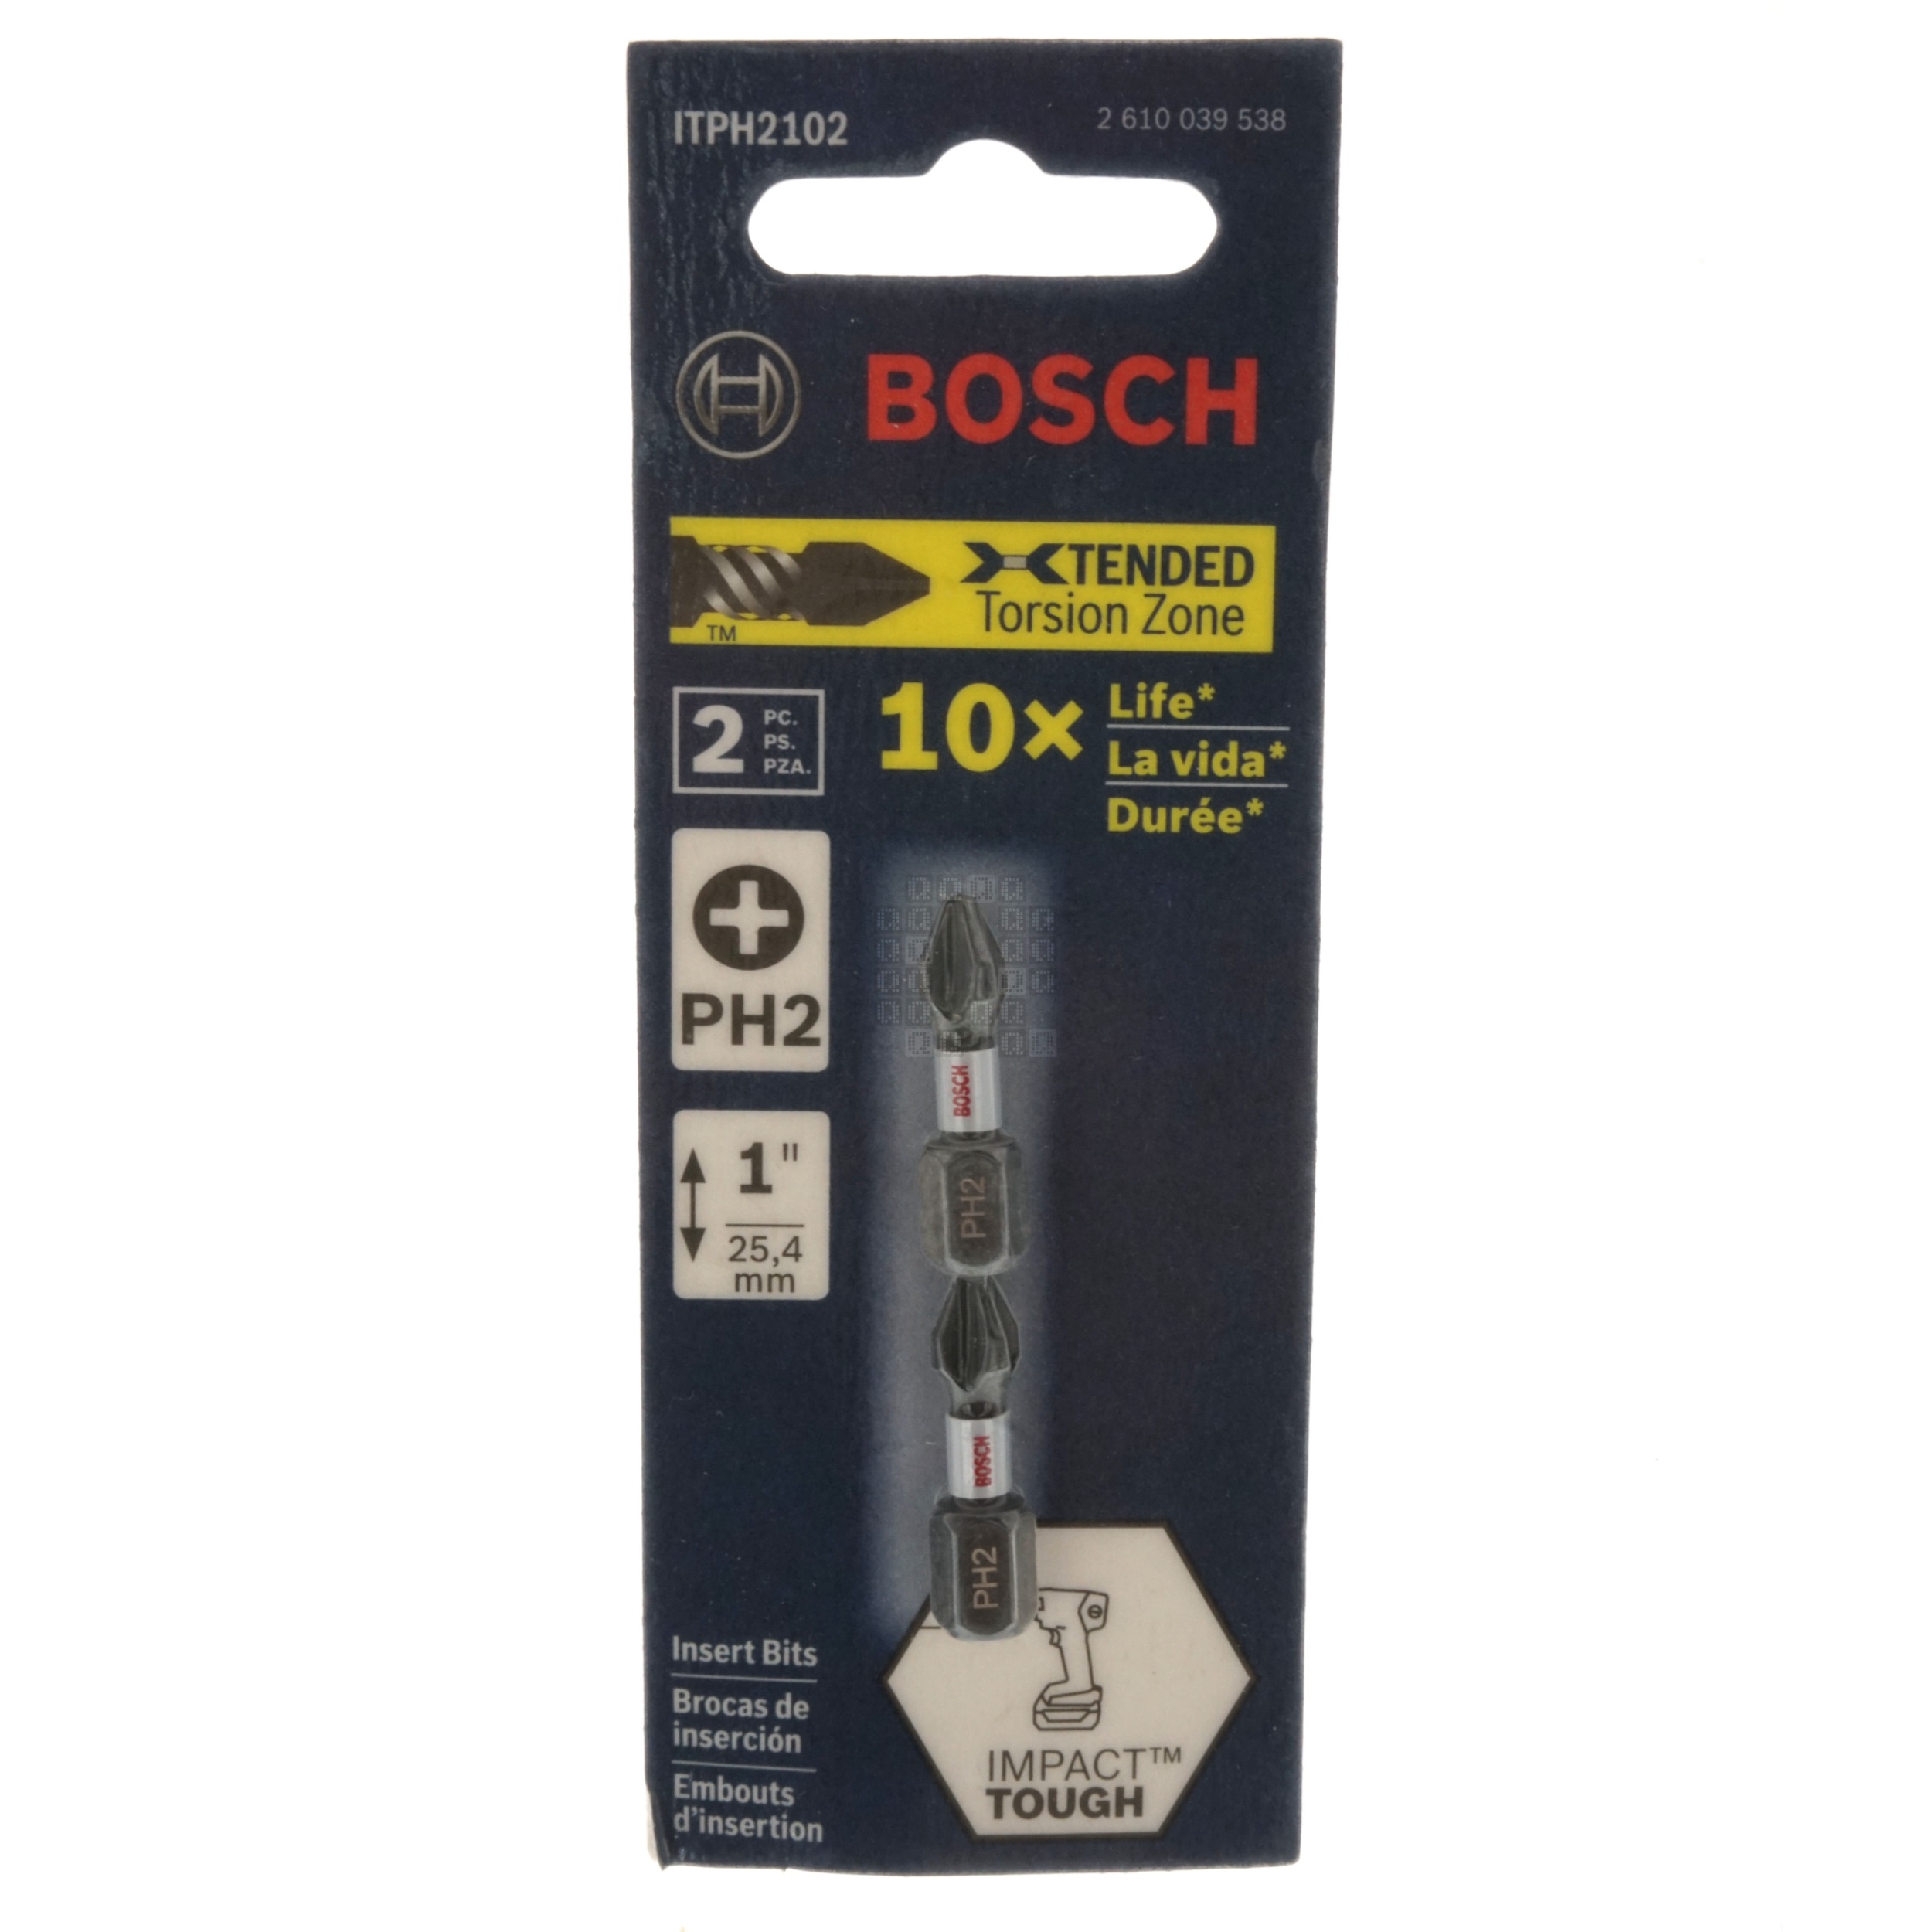 Bosch ITPH2102 Impact Tough #2 Phillips Insert Bits 1" Length 2-Pack 2610039538